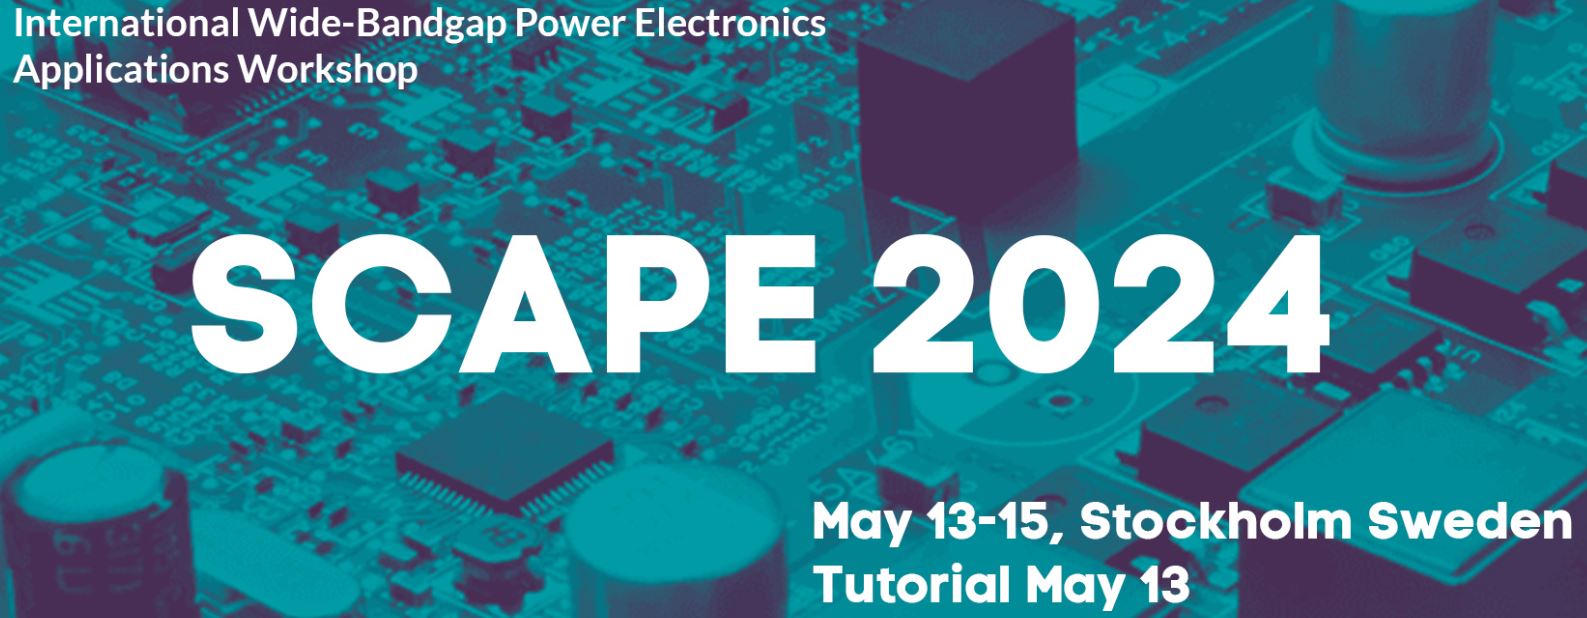 SCAPE 2024 - International Workshop on WBG Power Electronics Applications